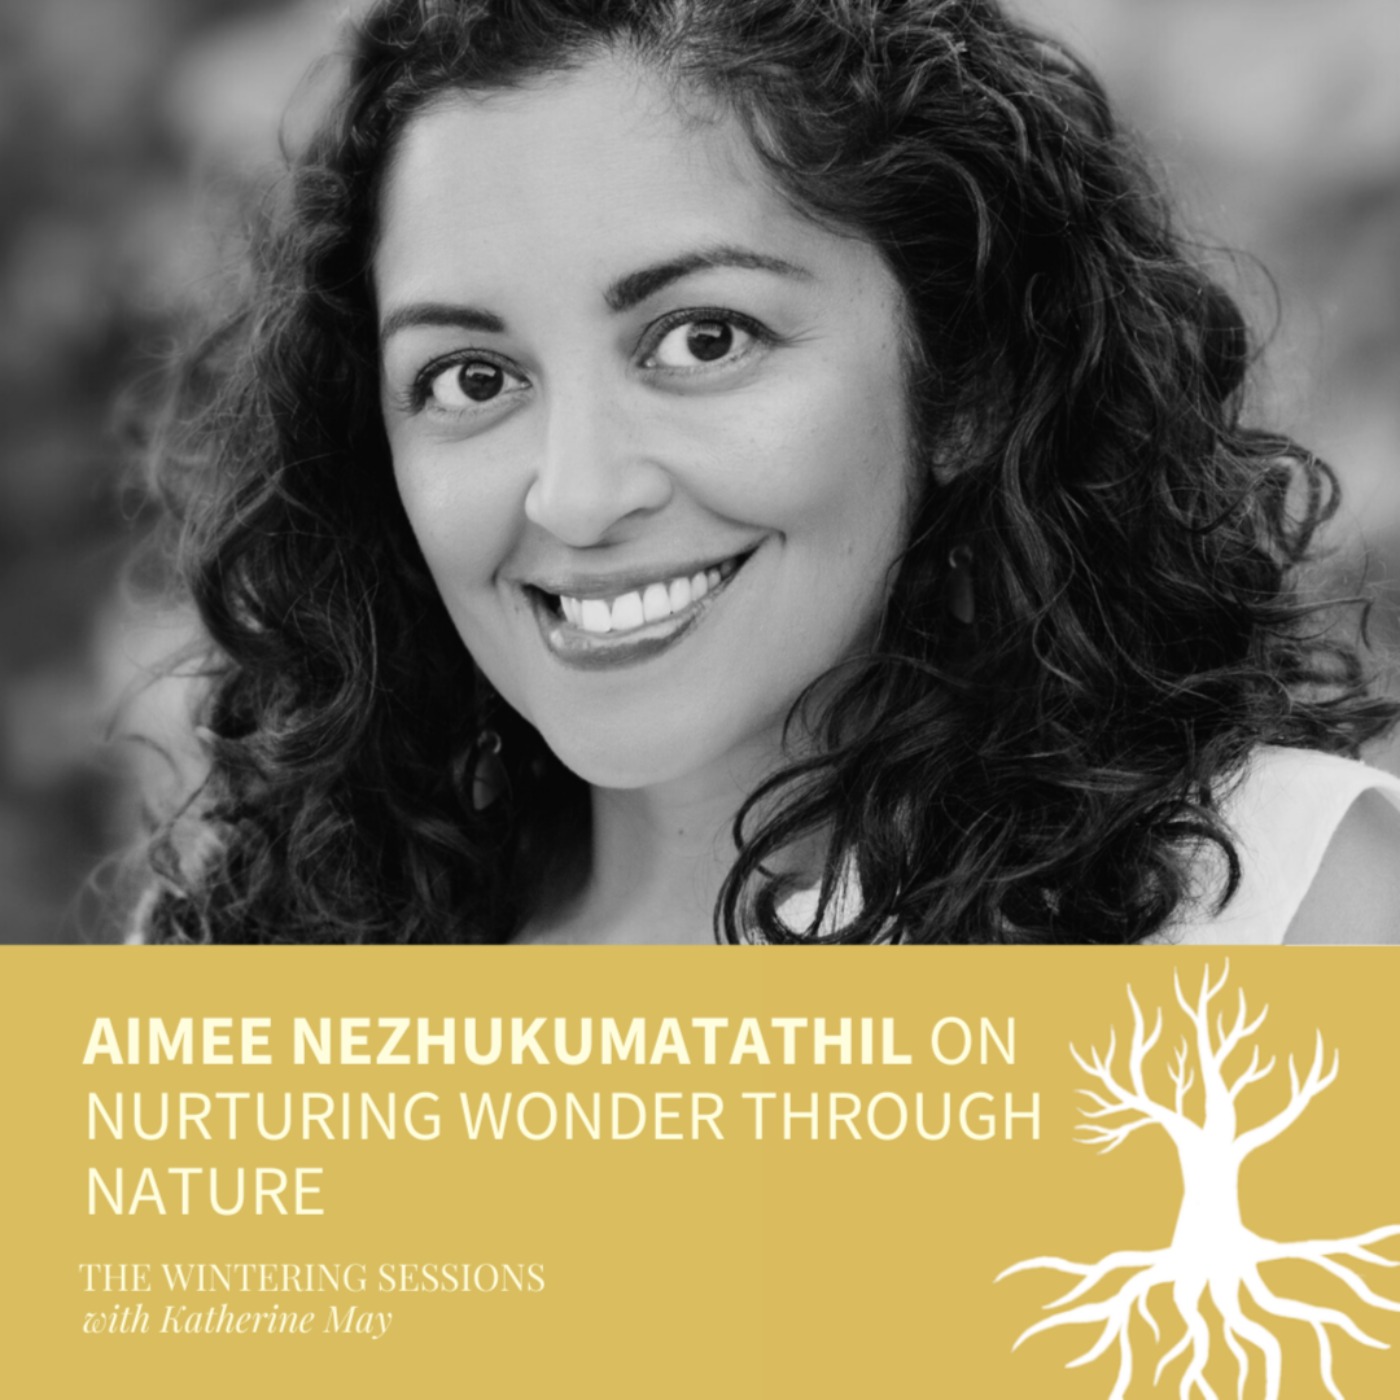 Aimee Nezhukumatathil on nurturing wonder through nature